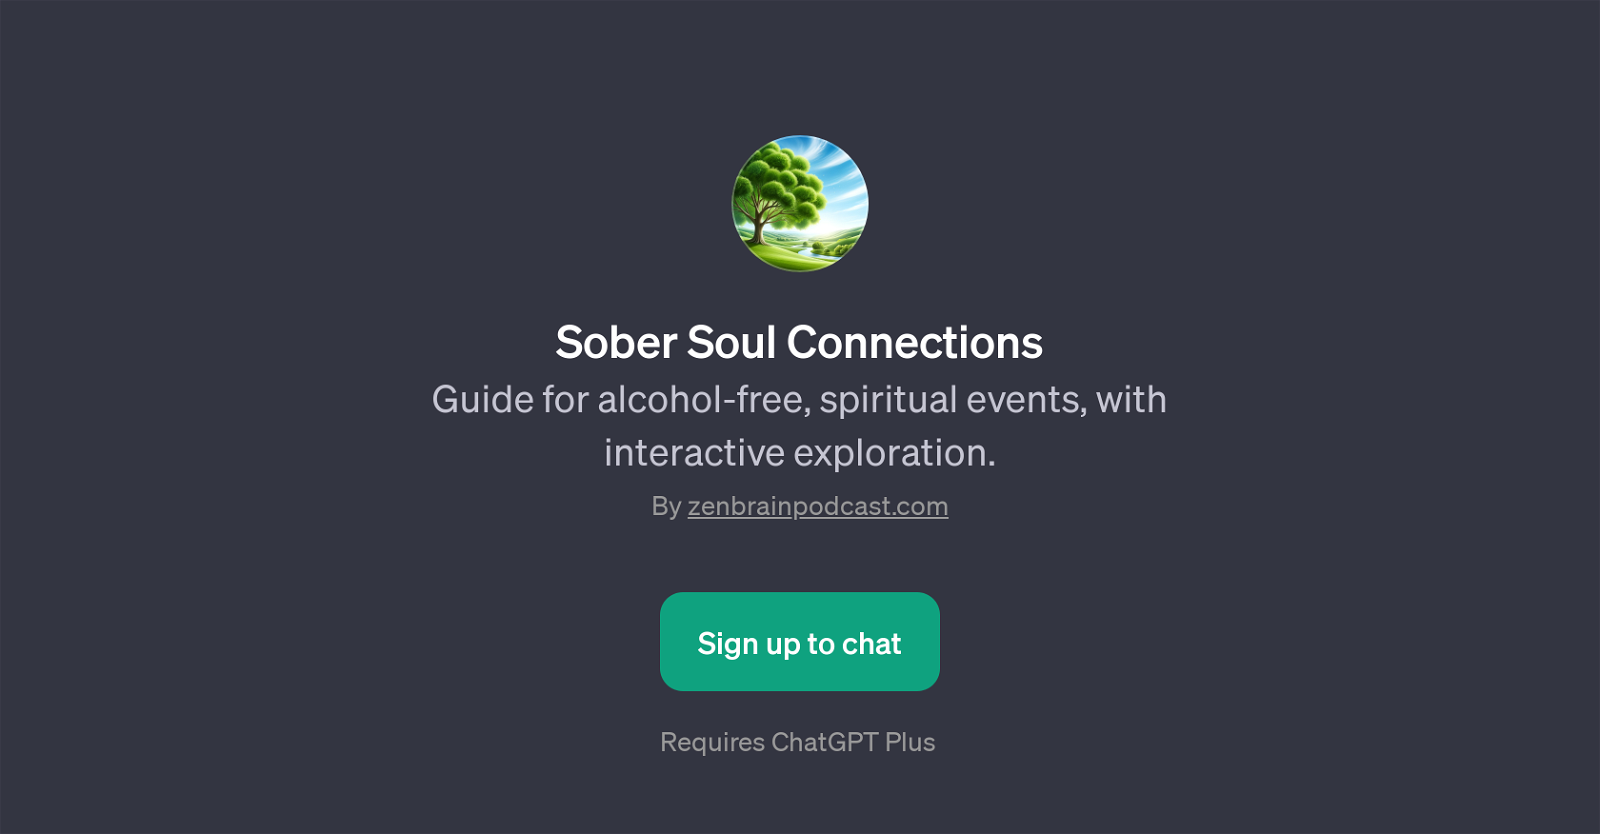 Sober Soul Connections website